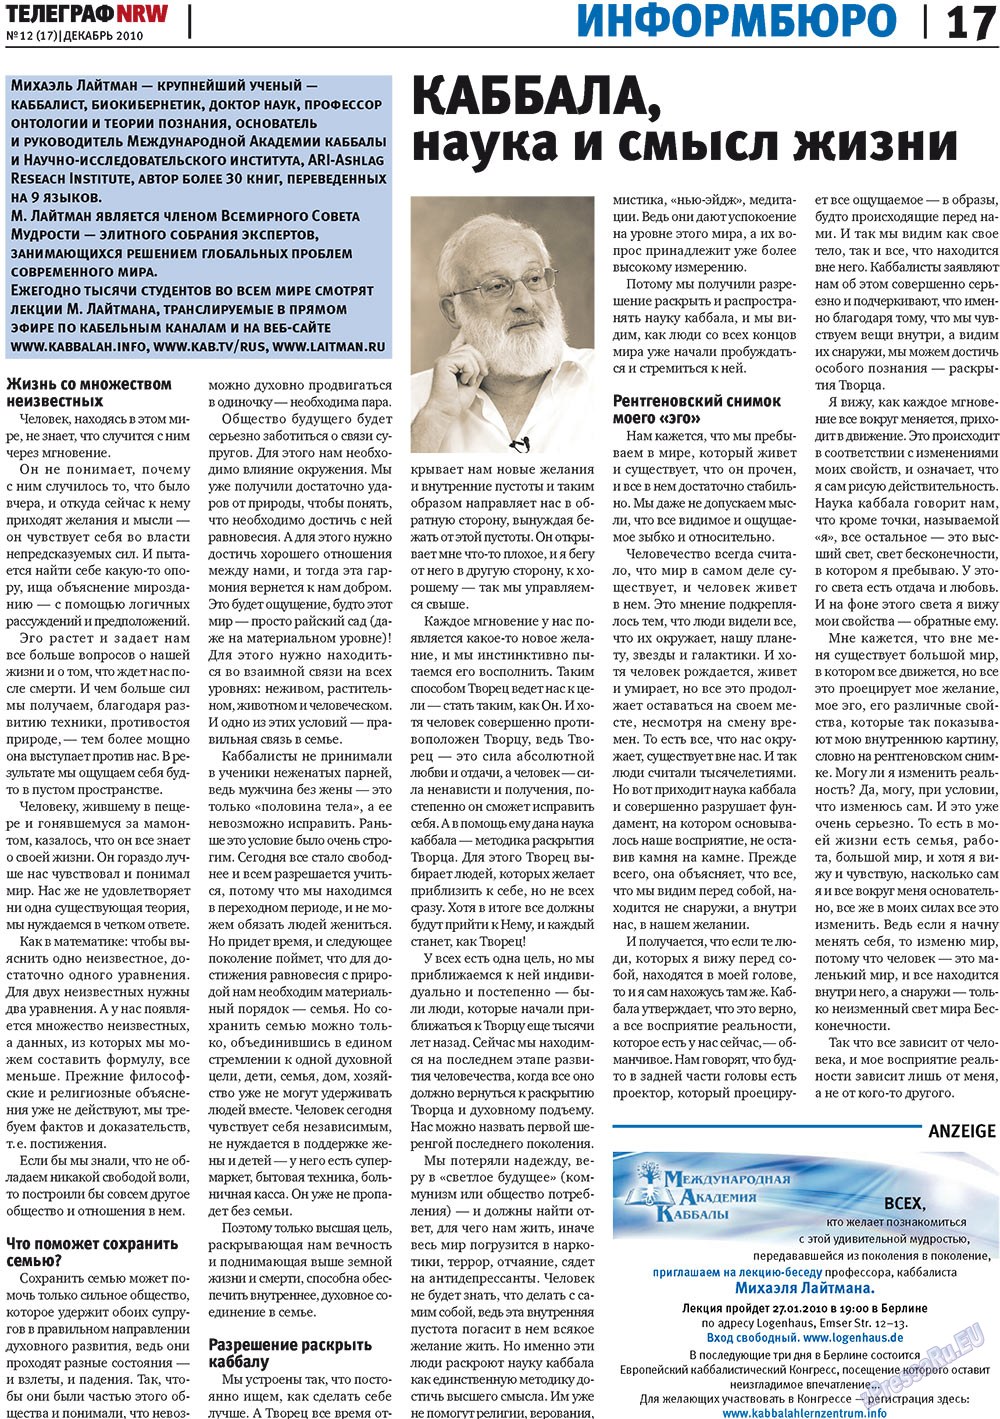 Телеграф NRW, газета. 2010 №12 стр.17